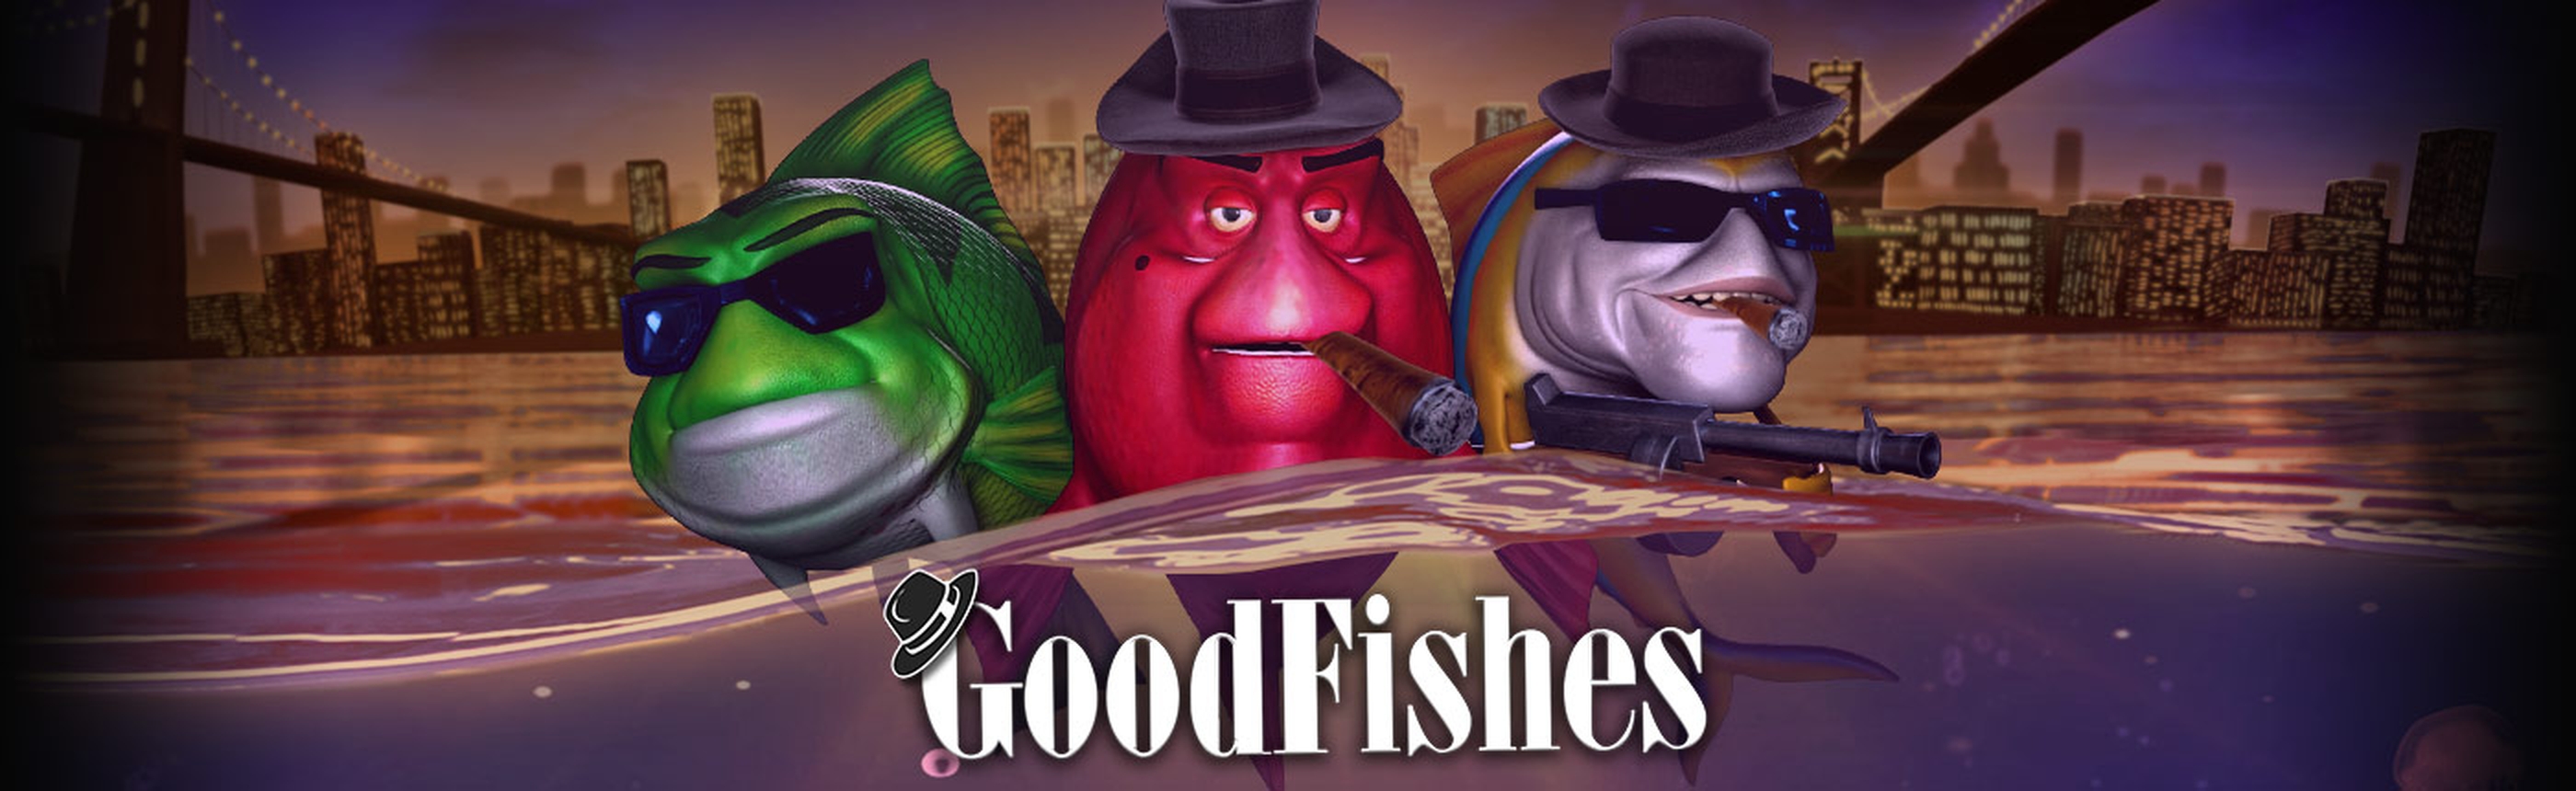 GoodFishes demo